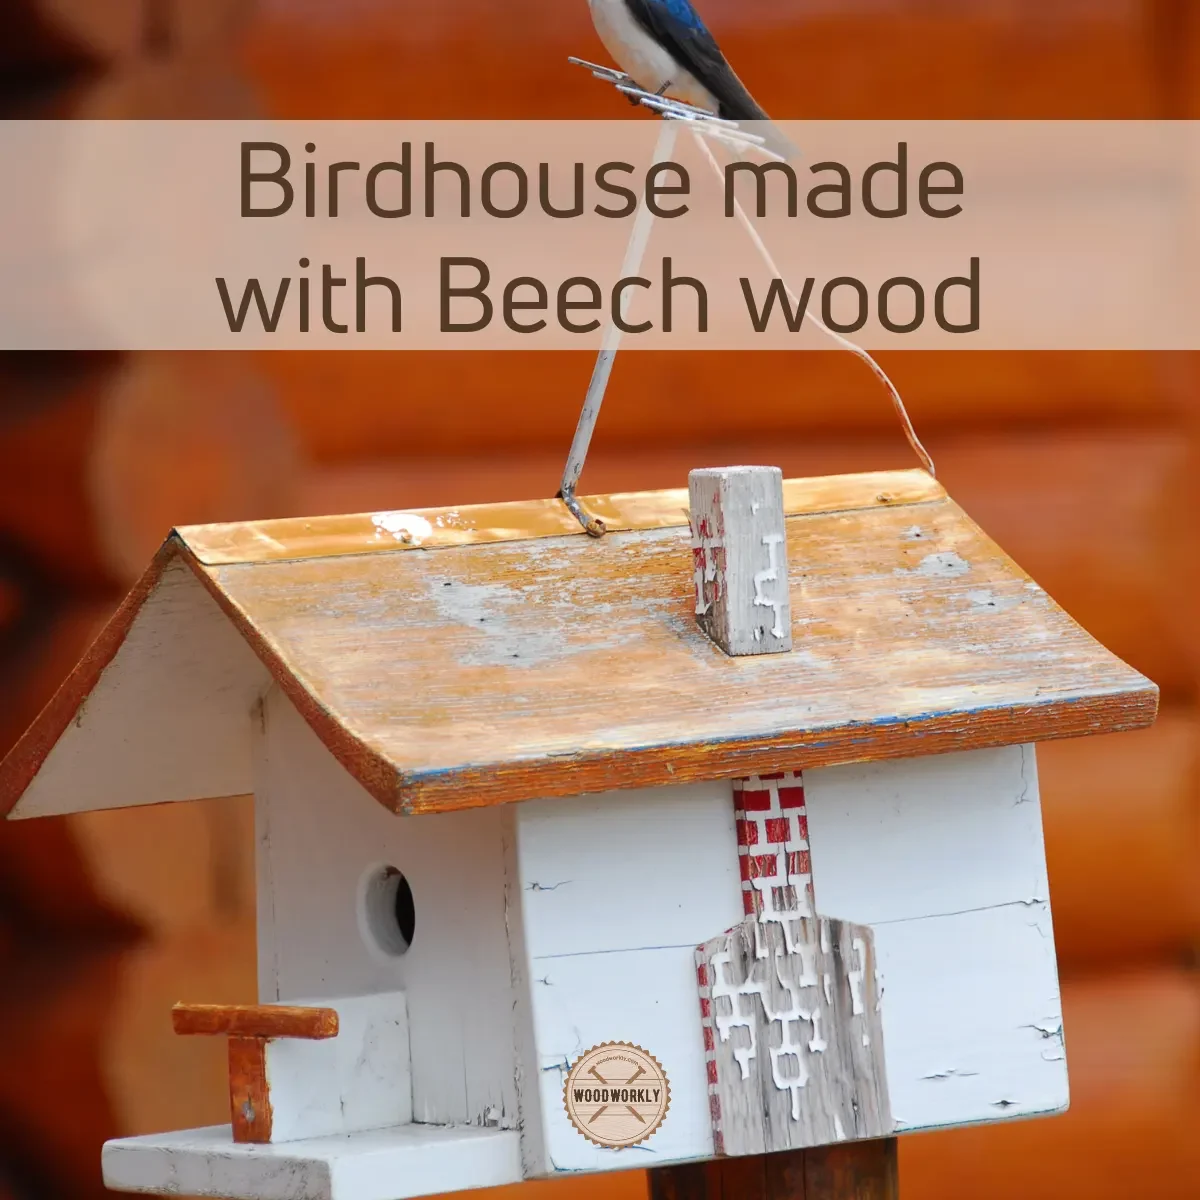 Birdhouse made with Beech wood